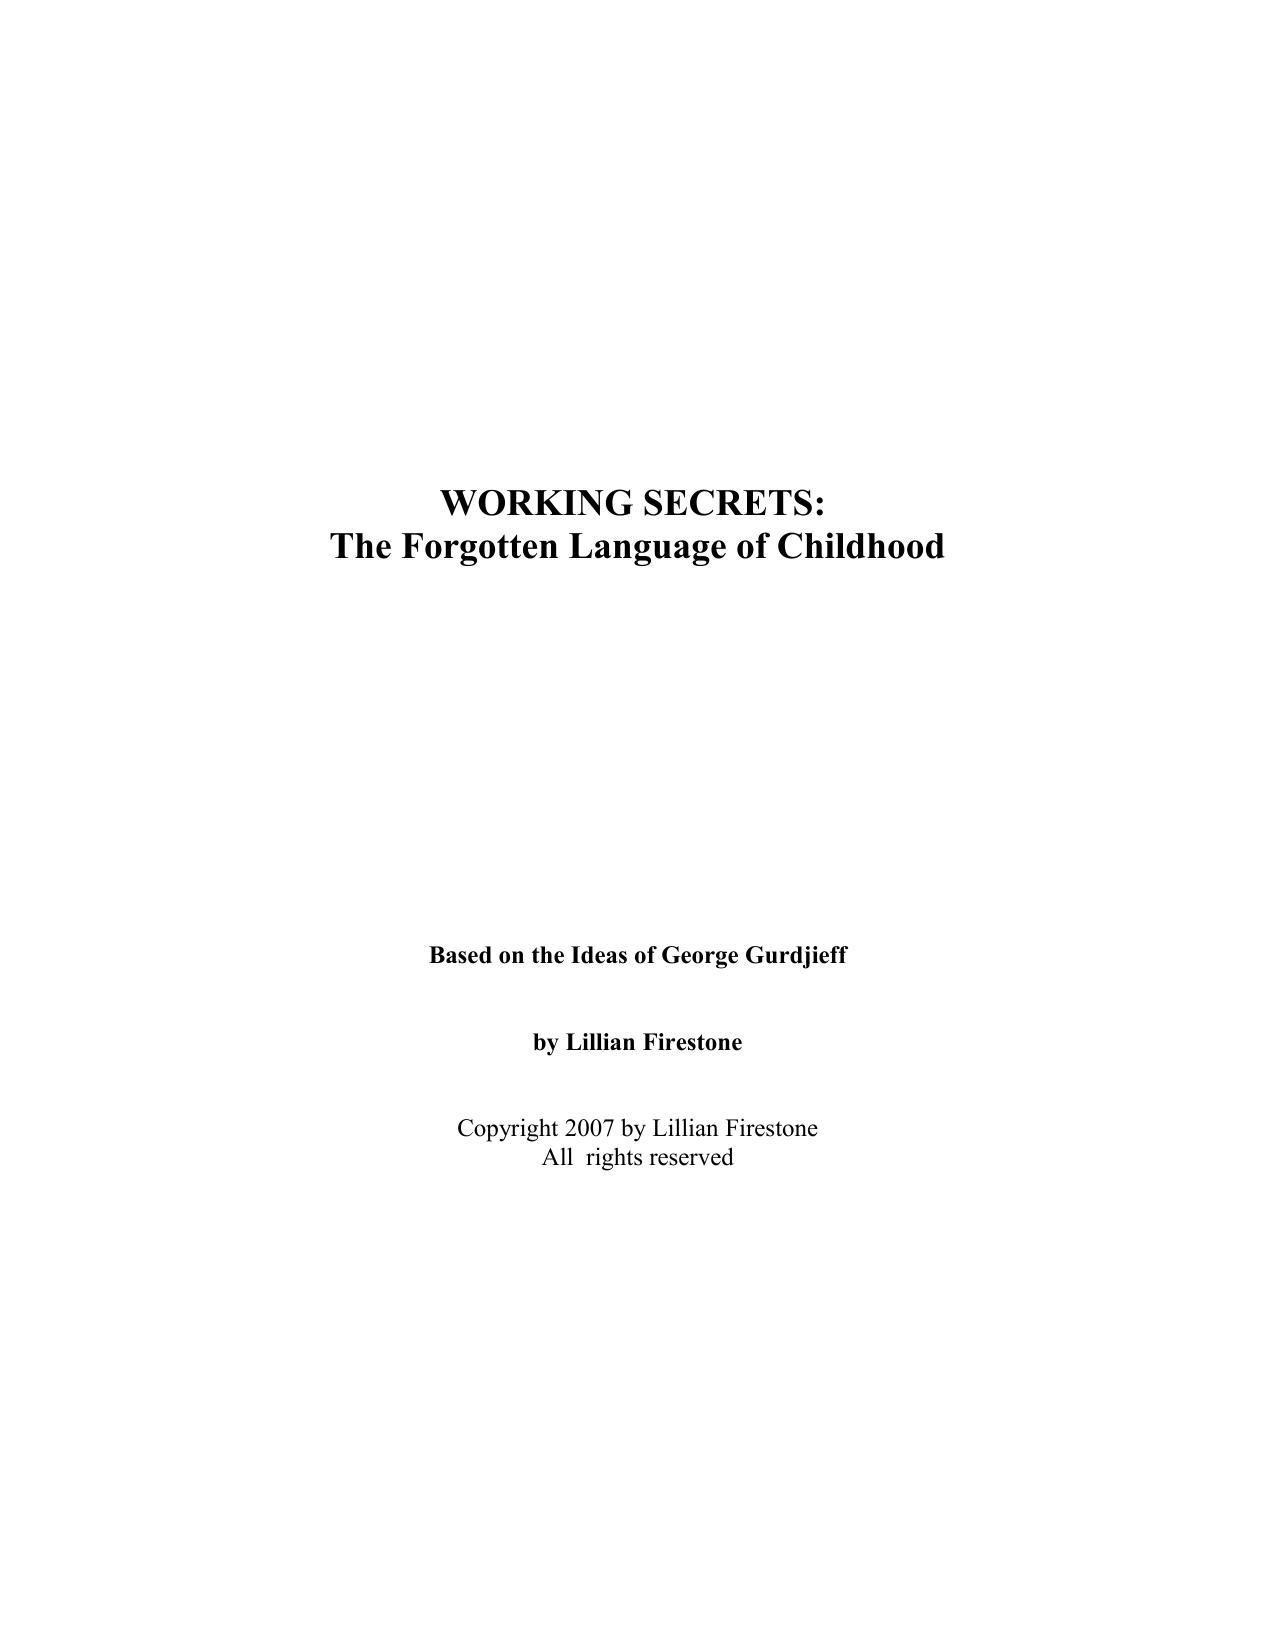 Working Secrets - The Forgotten Language of Childhood